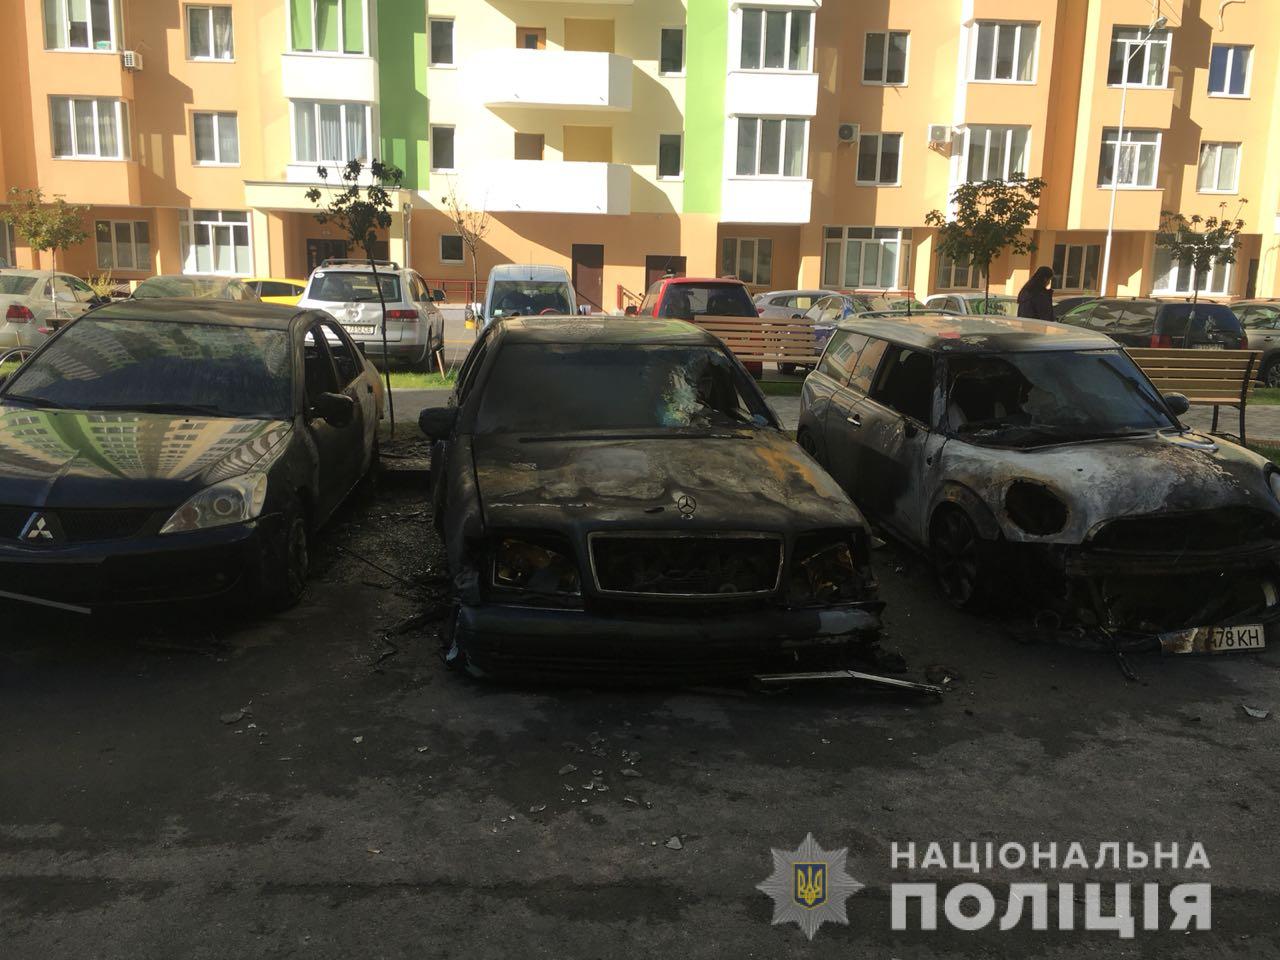 Aleksandrova’s burned cars. Photo: National Police ~